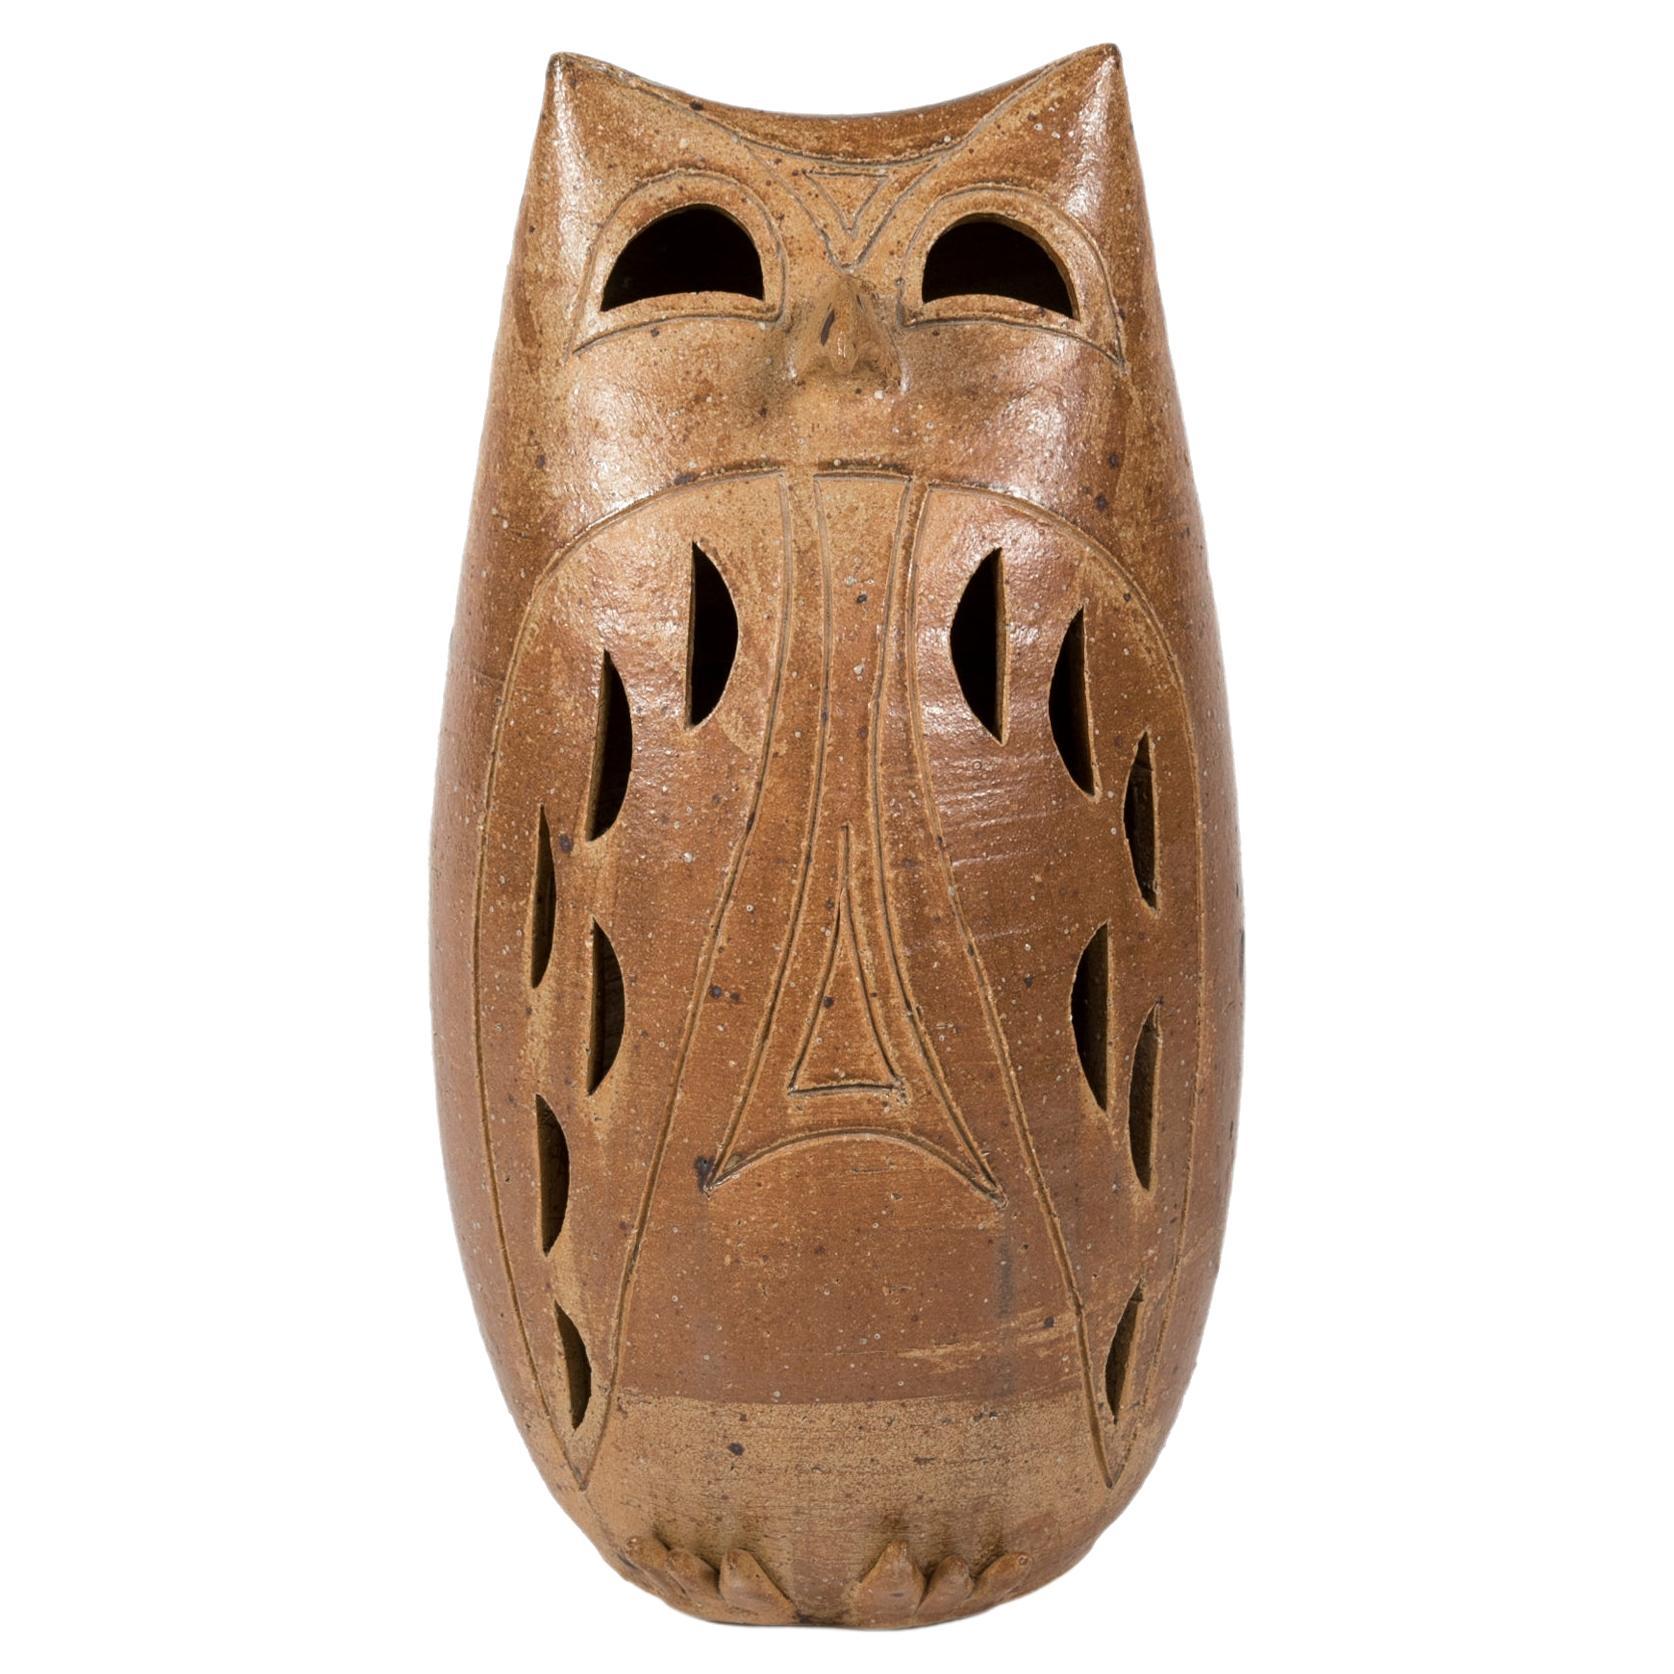 1970's owl ceramic lamp.
Great design
Signed 
France.